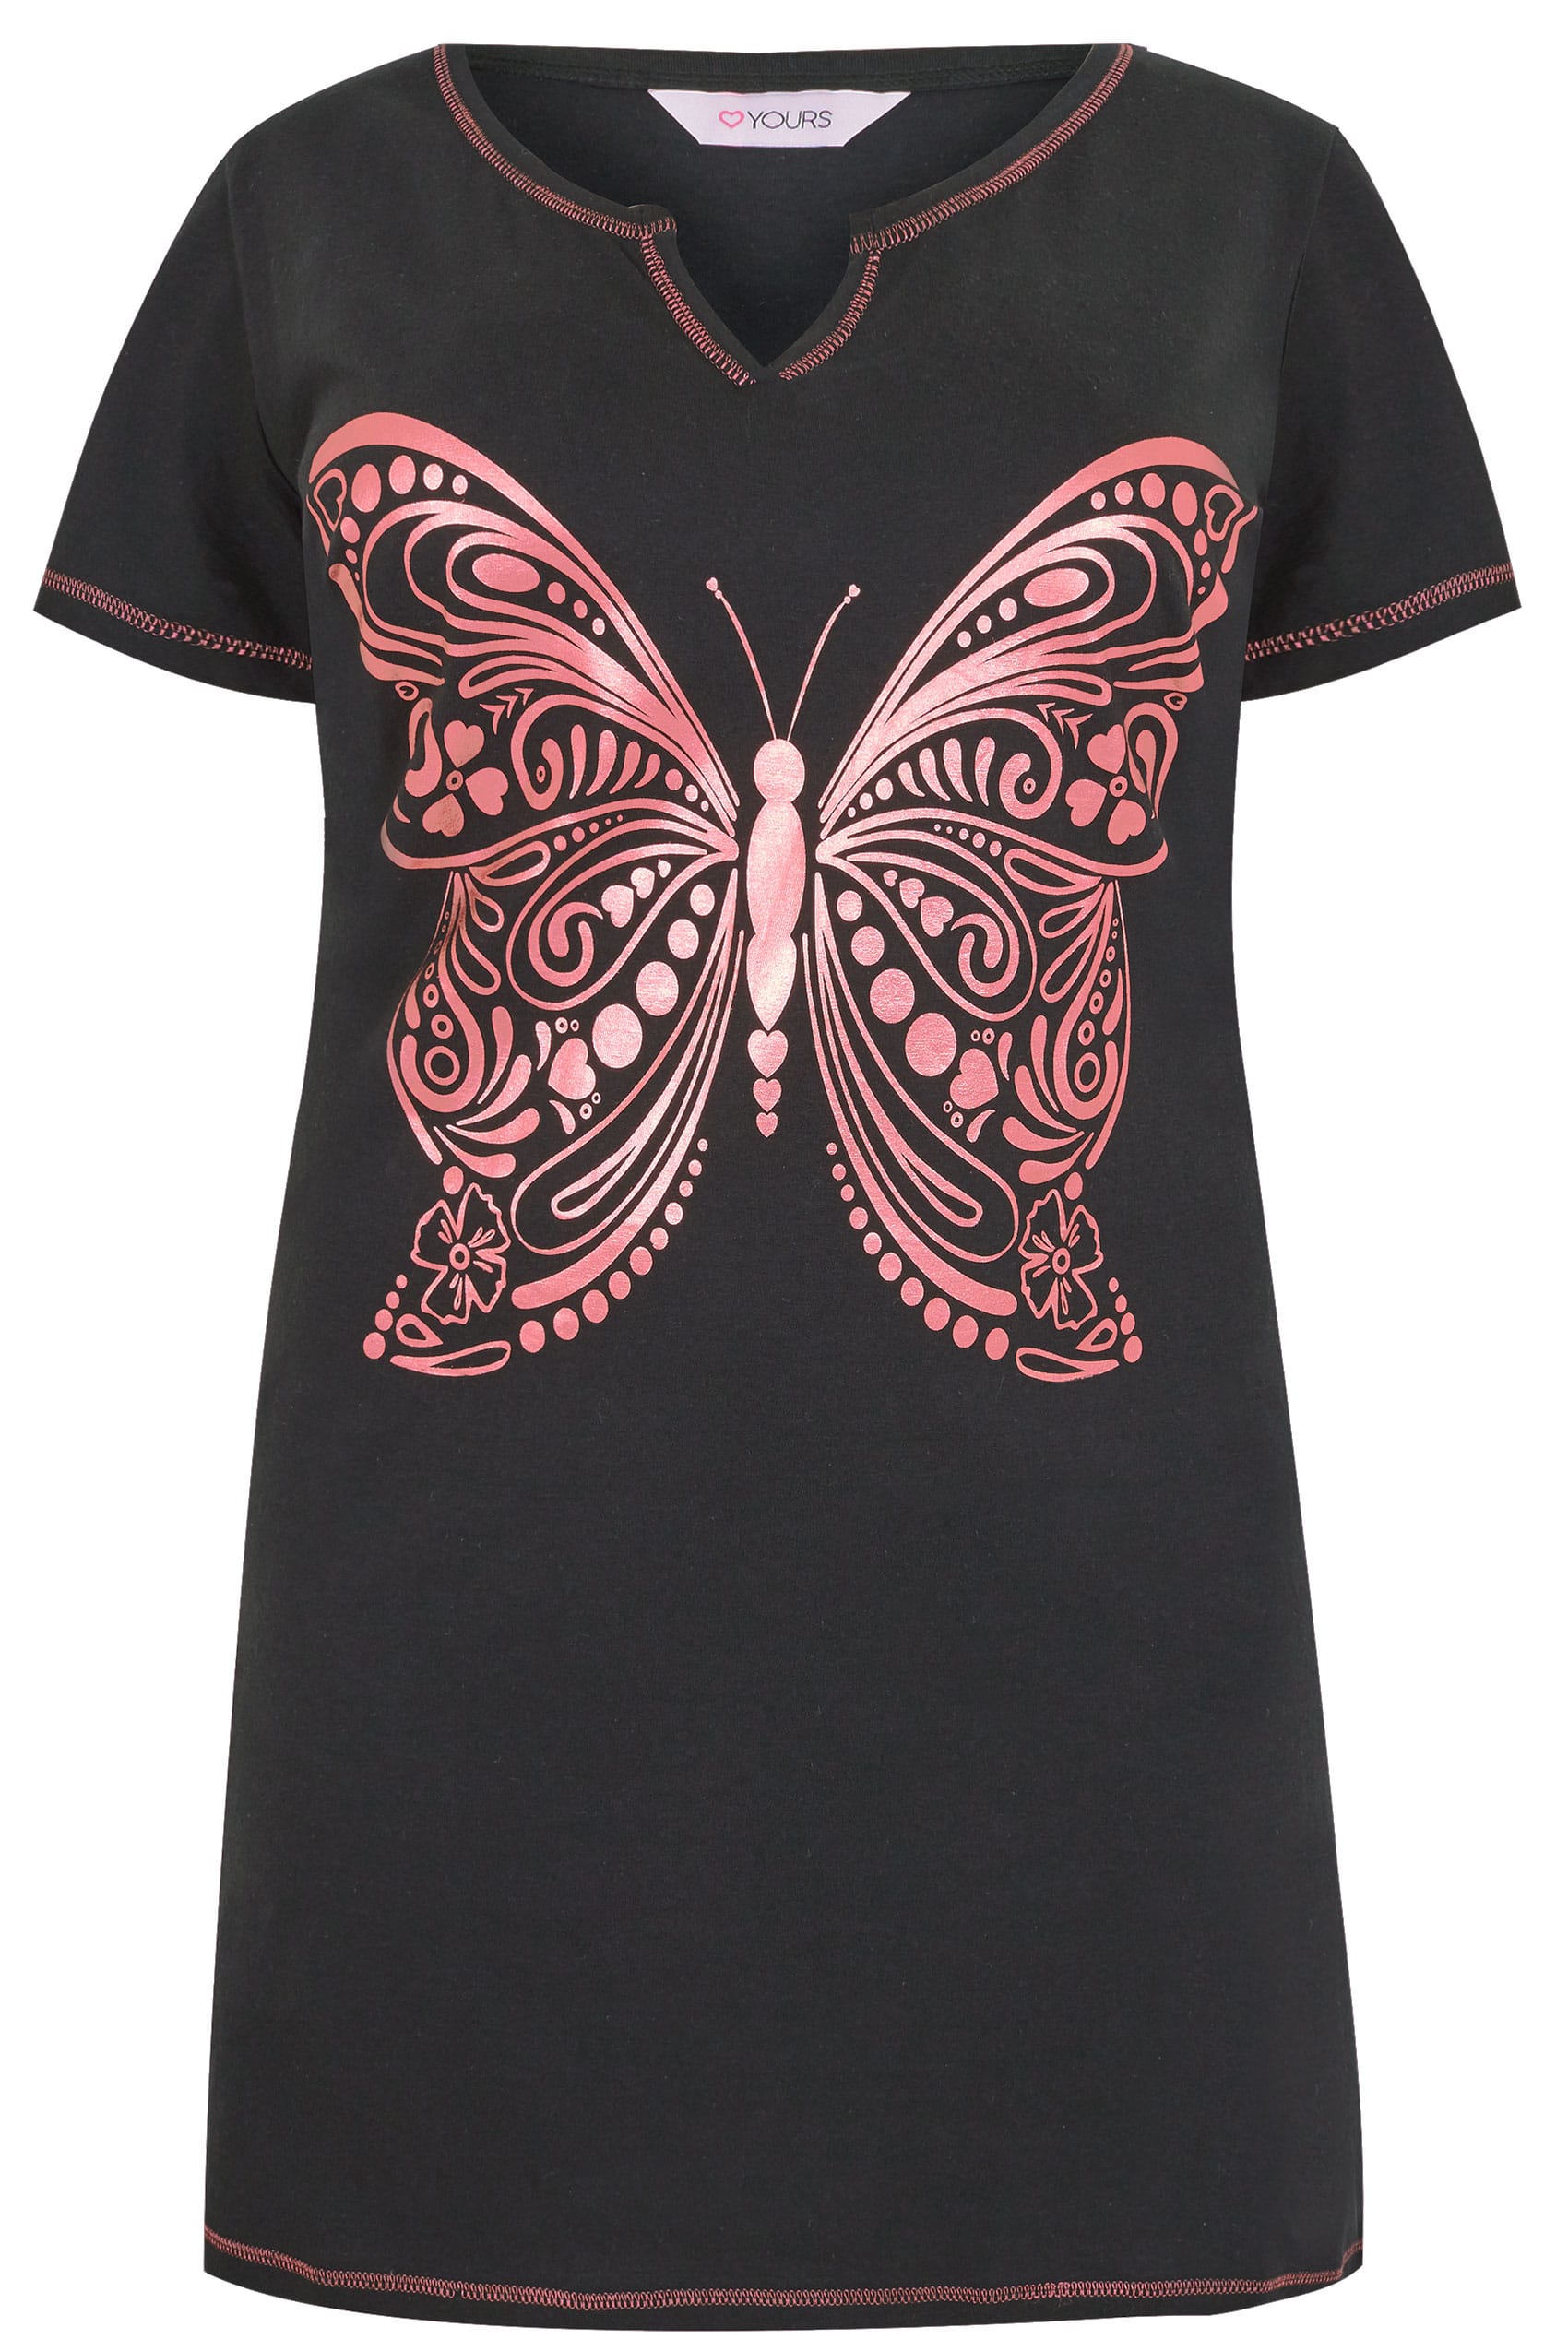 Black & Metallic Pink Butterfly Print Nightdress, plus size 16 to 36